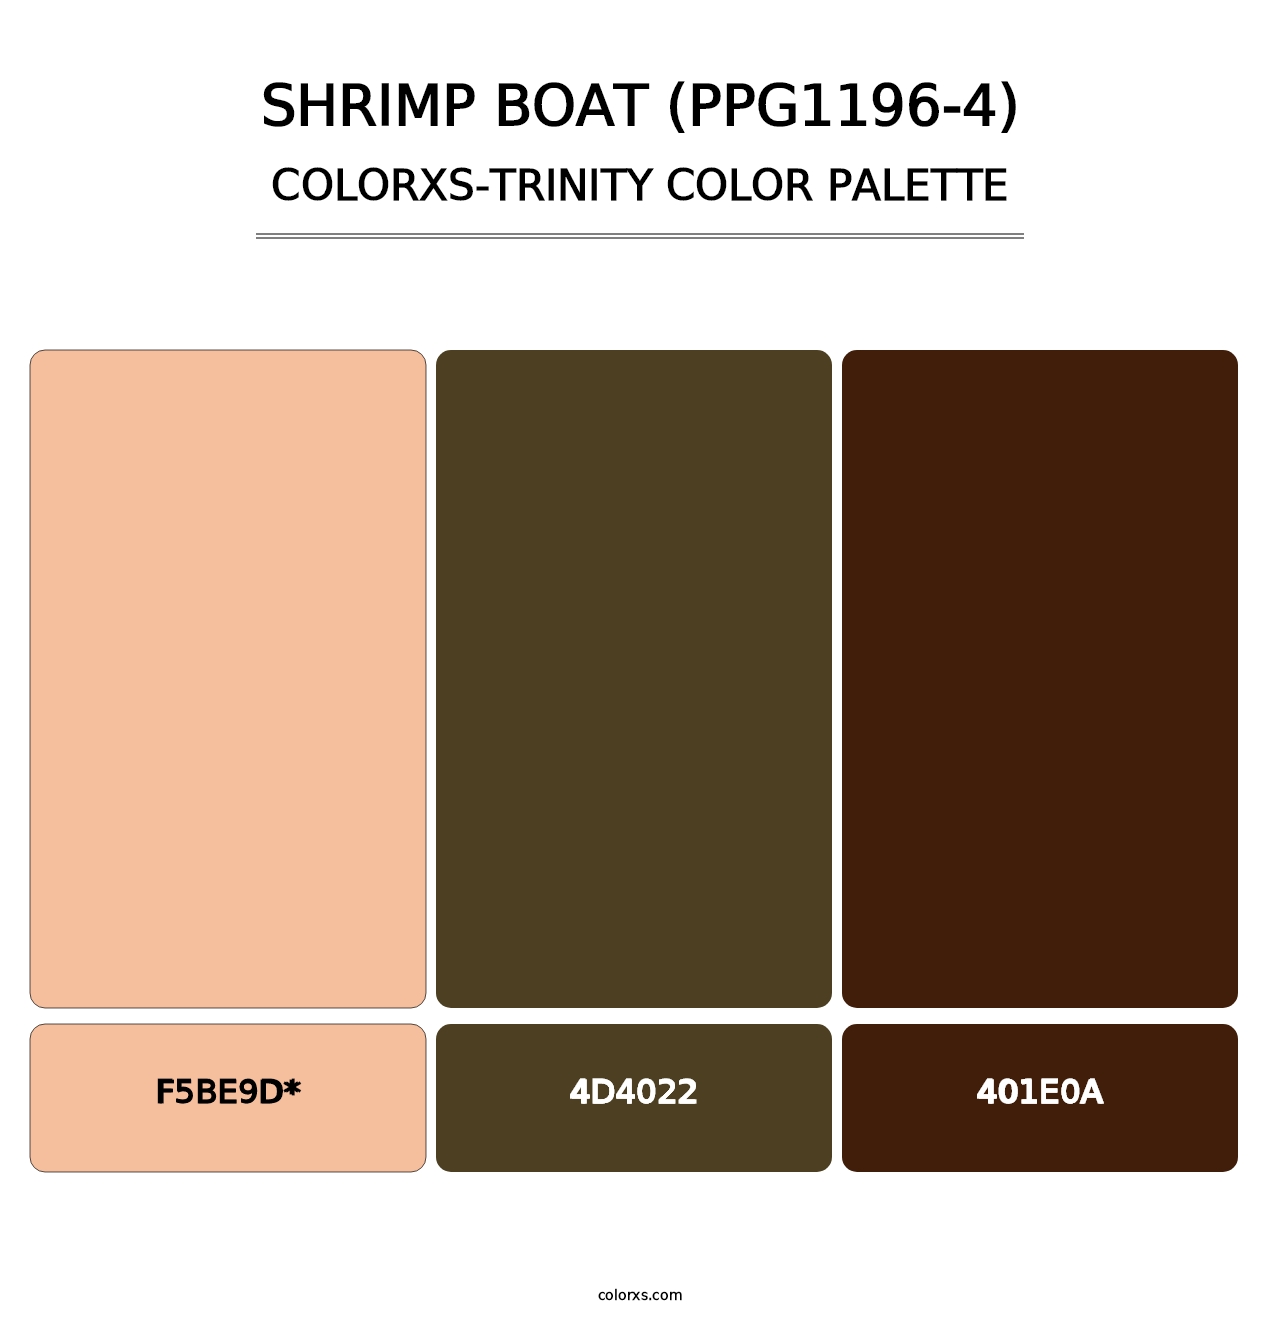 Shrimp Boat (PPG1196-4) - Colorxs Trinity Palette